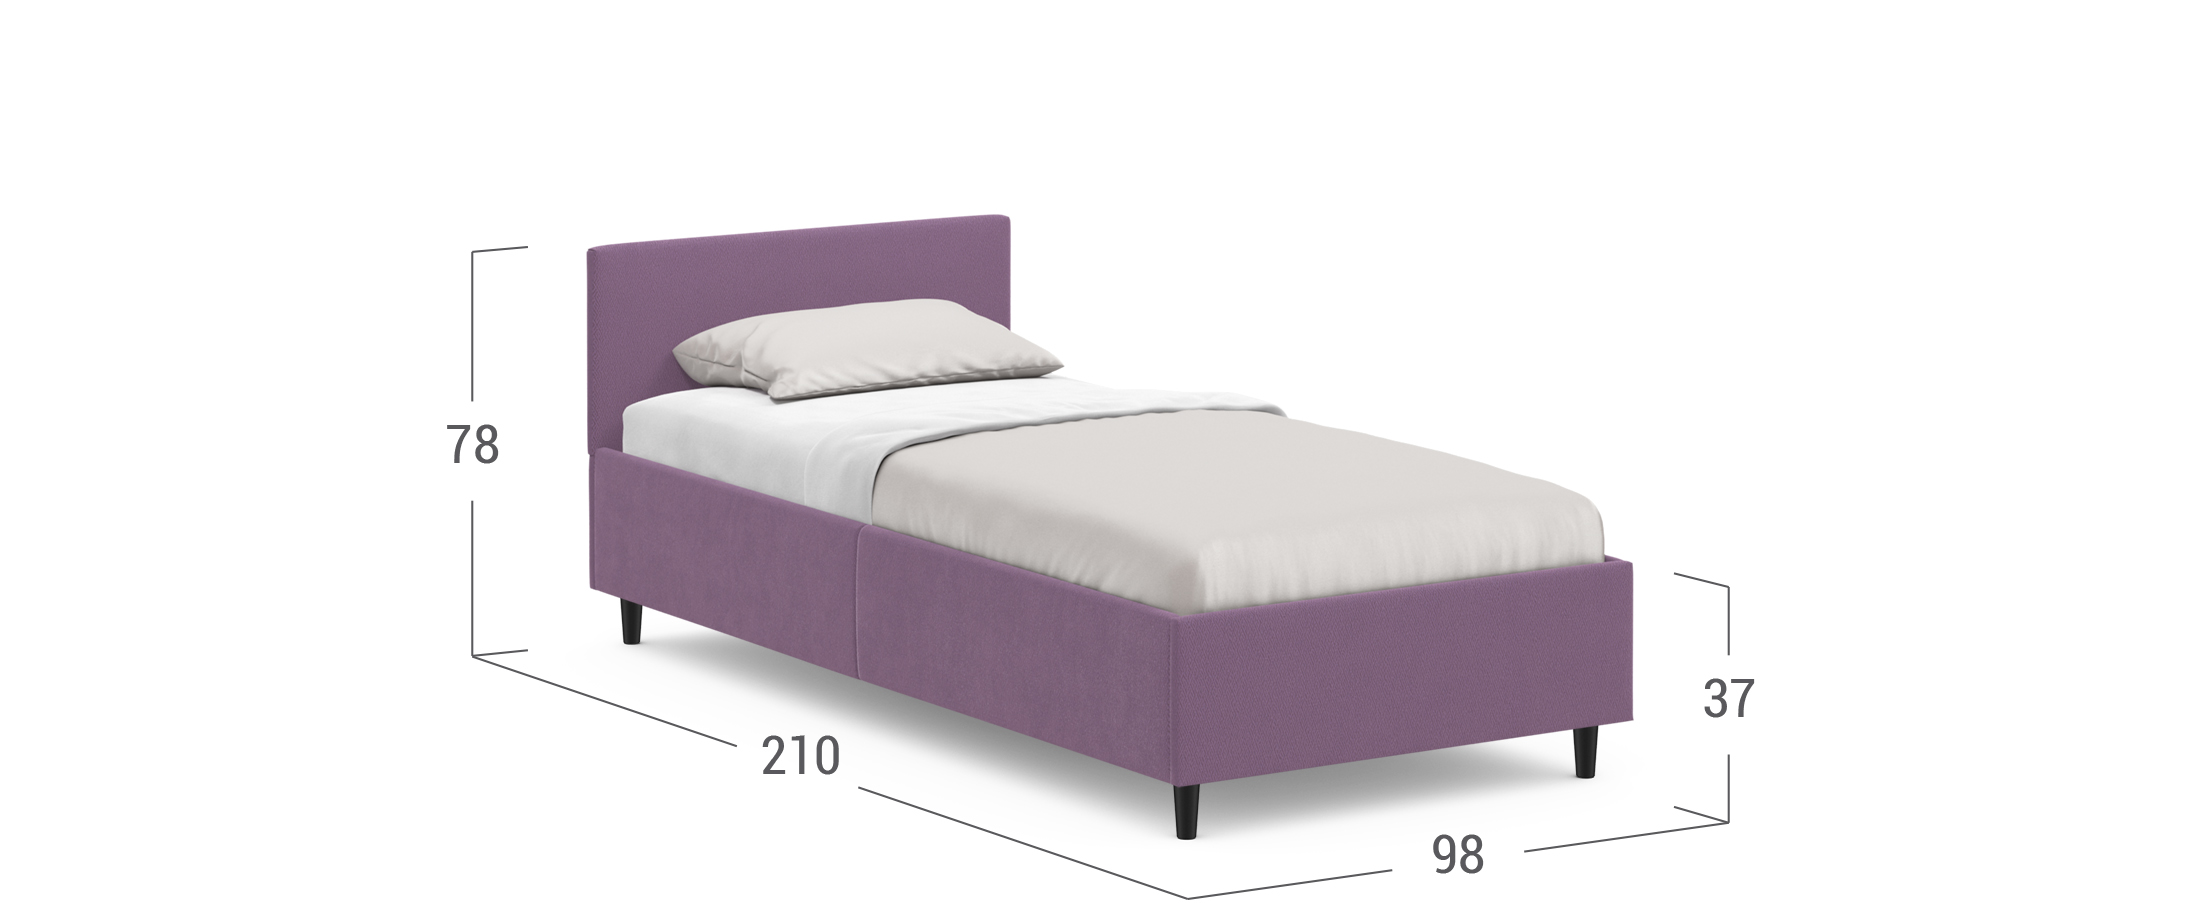 длина односпальной кровати